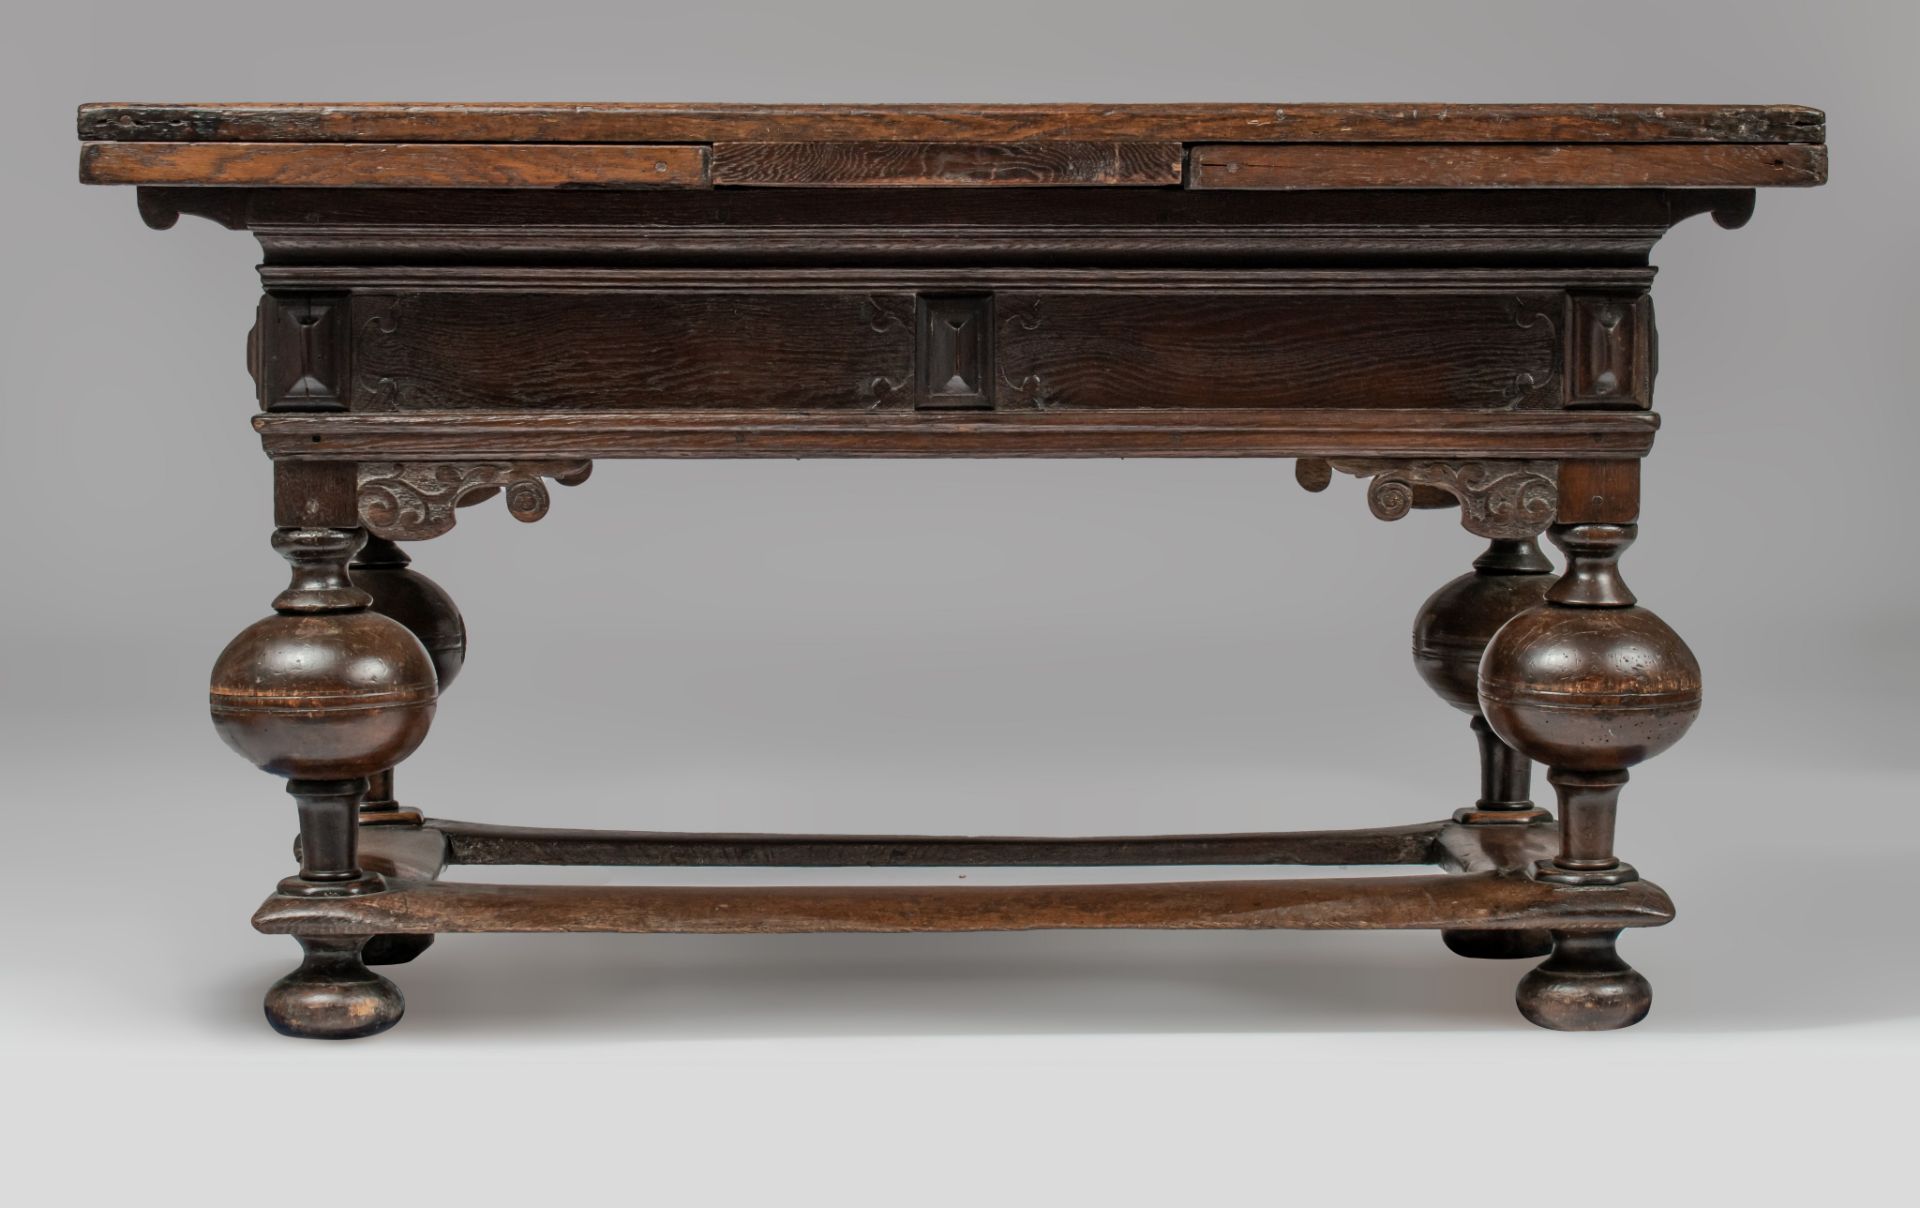 An impressive Flemish or Dutch oak table, early 17thC, H 80 - W 146 - 252 - D 85 cm - Image 6 of 8